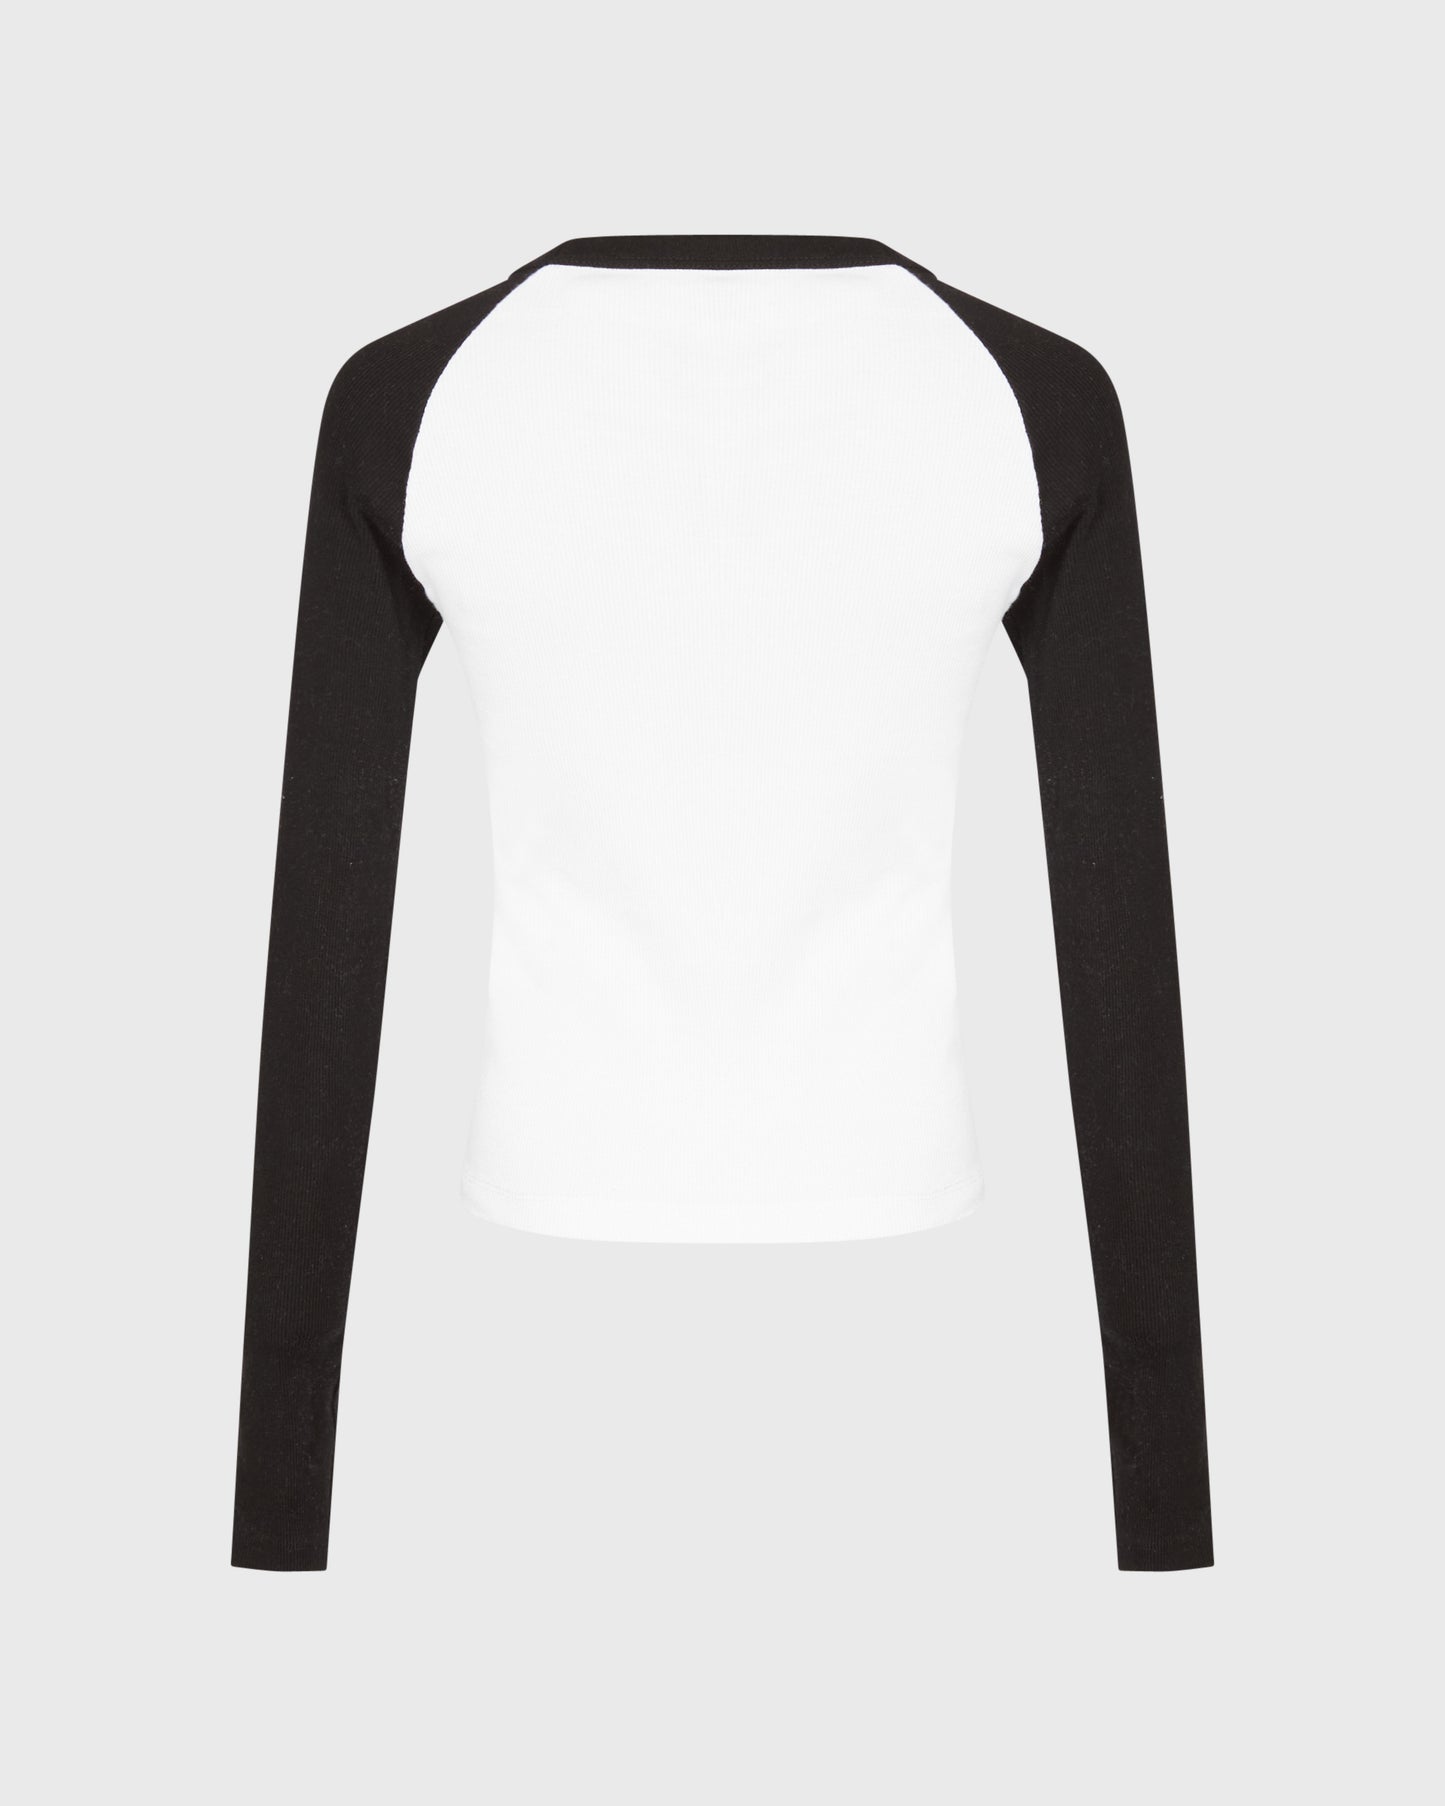 Brandy Melville Black and White Girls T-shirt